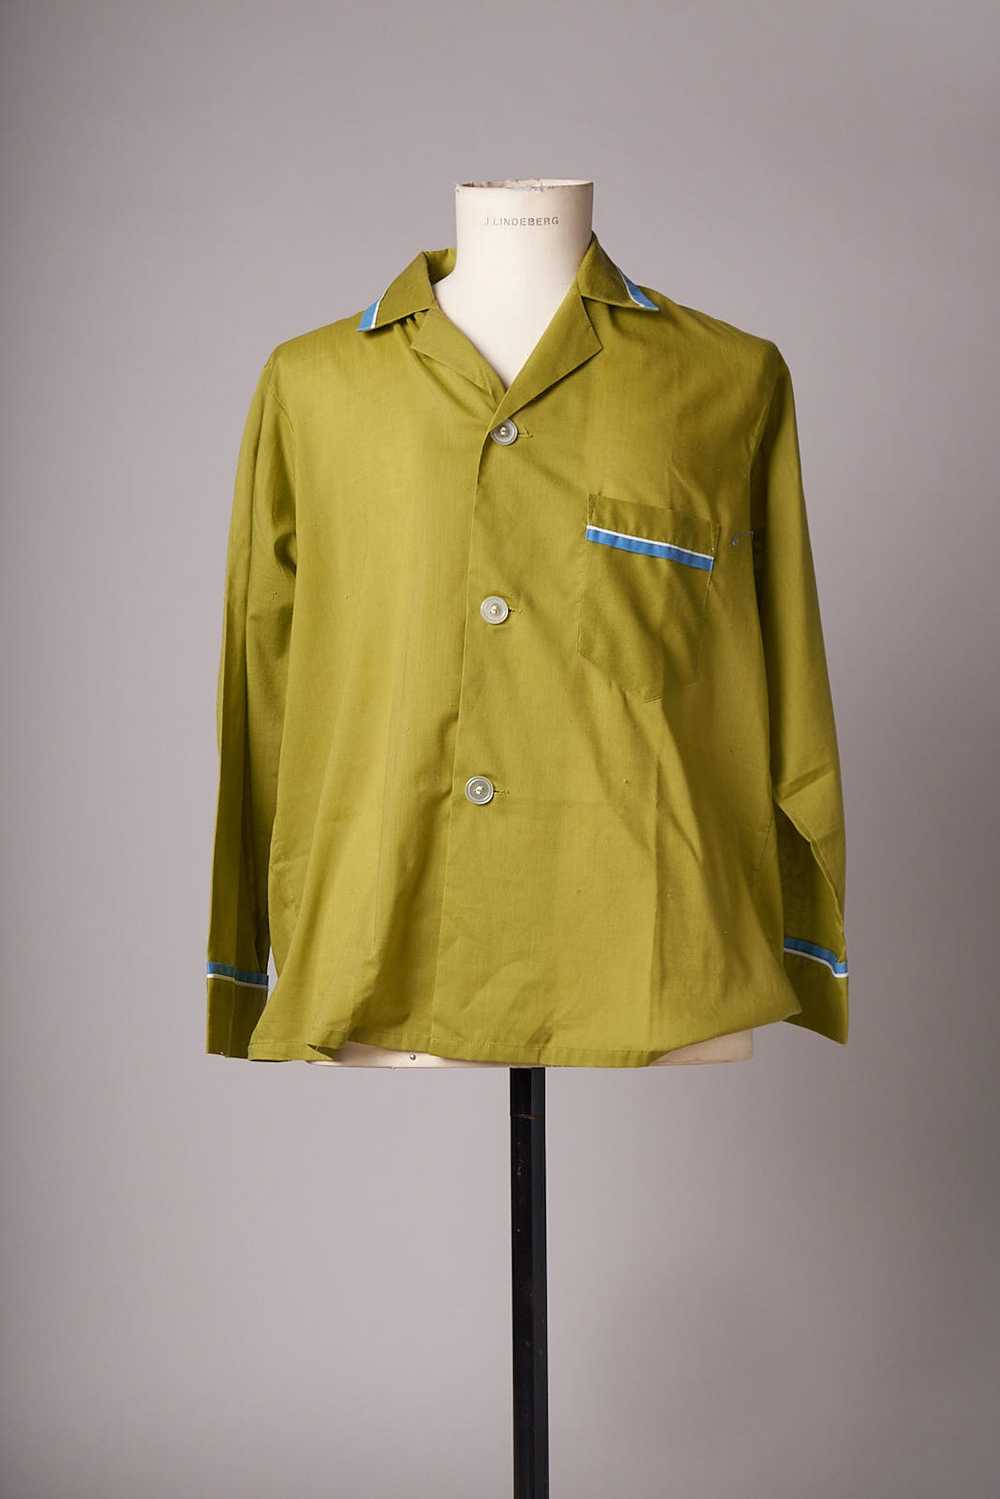 Vintage 1950's Men's Pajama Top Shirt - image 1